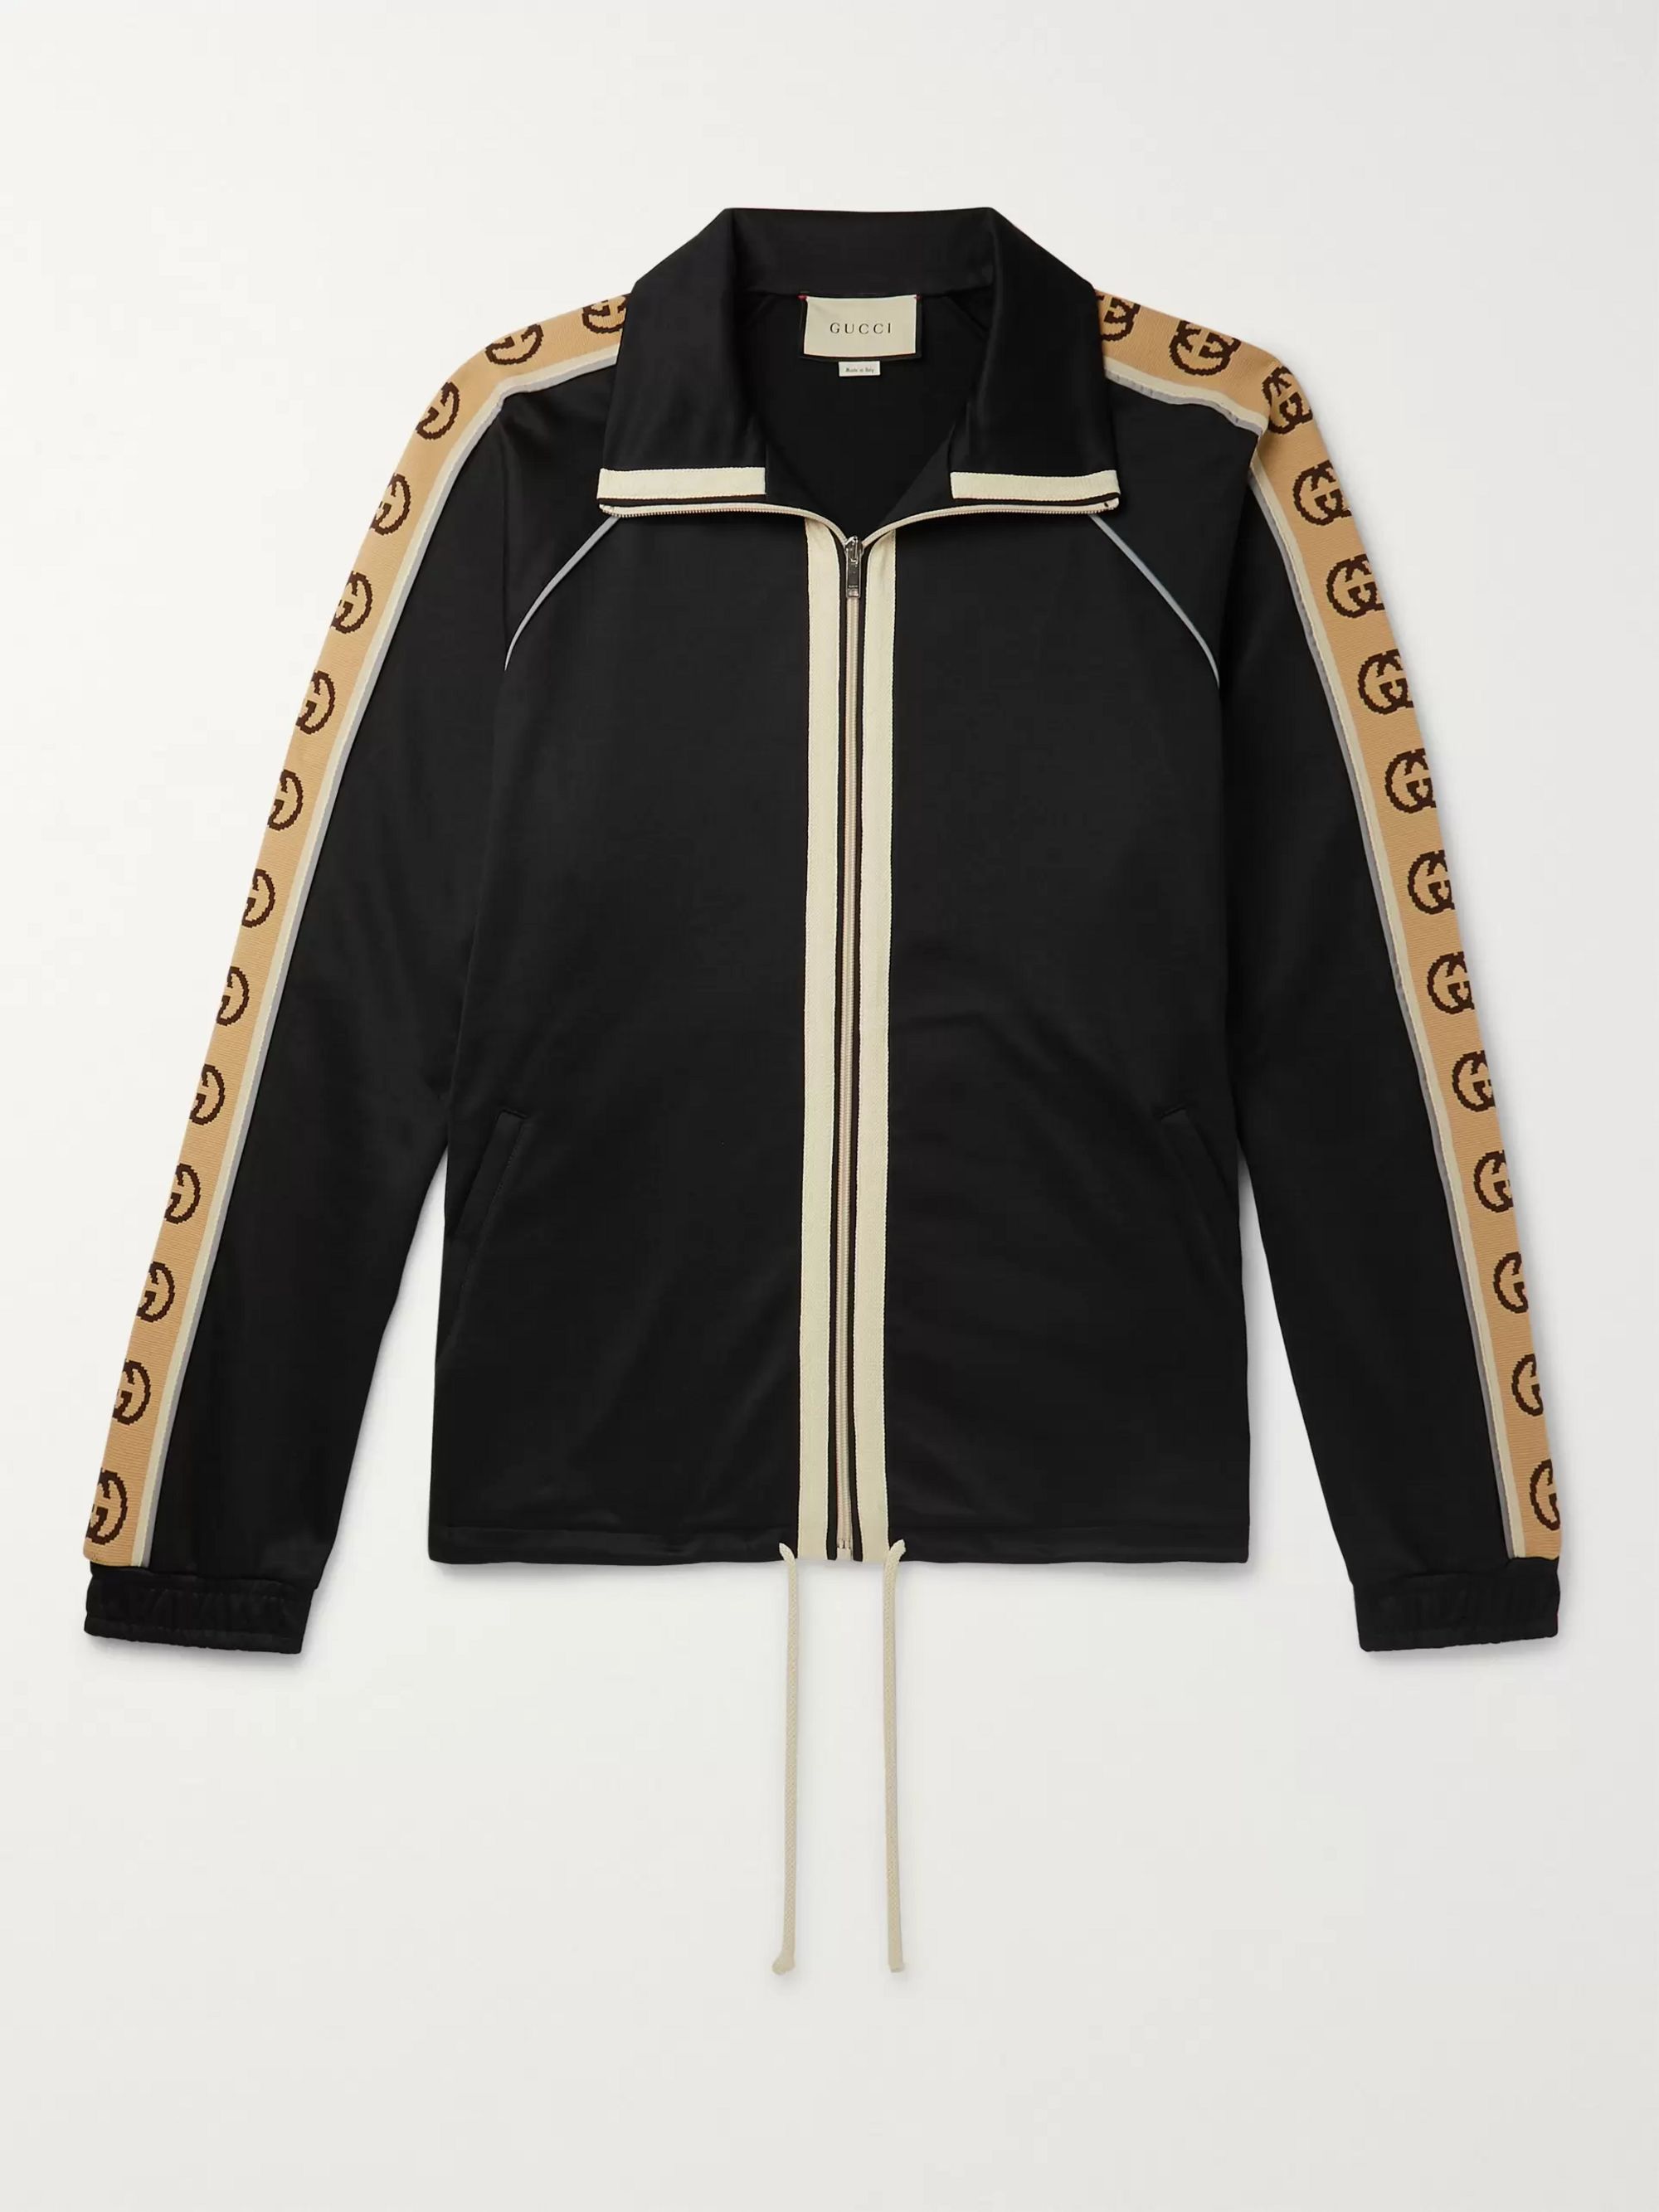 Gucci Reflective Jacket Best Sale, 51% OFF | www.ingeniovirtual.com